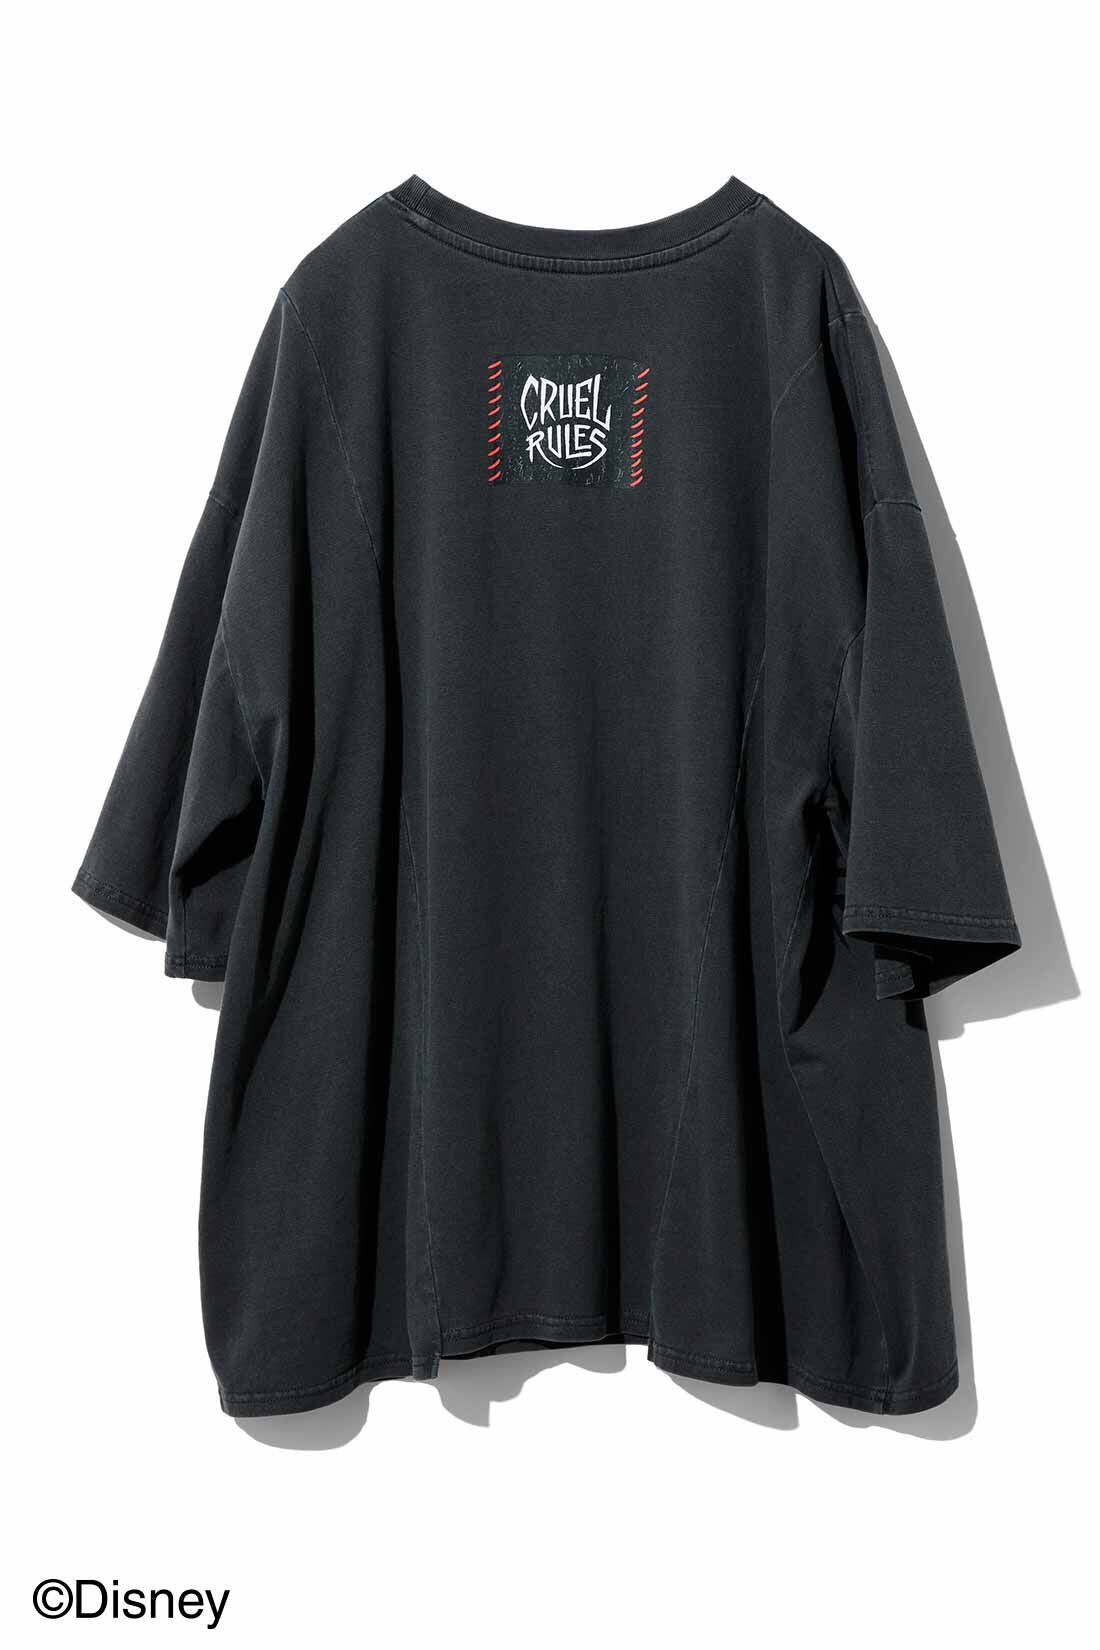 MEDE19F|MEDE19F　MEDE19F 【Disney】古着屋でみつけたようなリメイクライクTシャツ〈クルエラ〉|後ろには「CRUEL RULES」のロゴ。